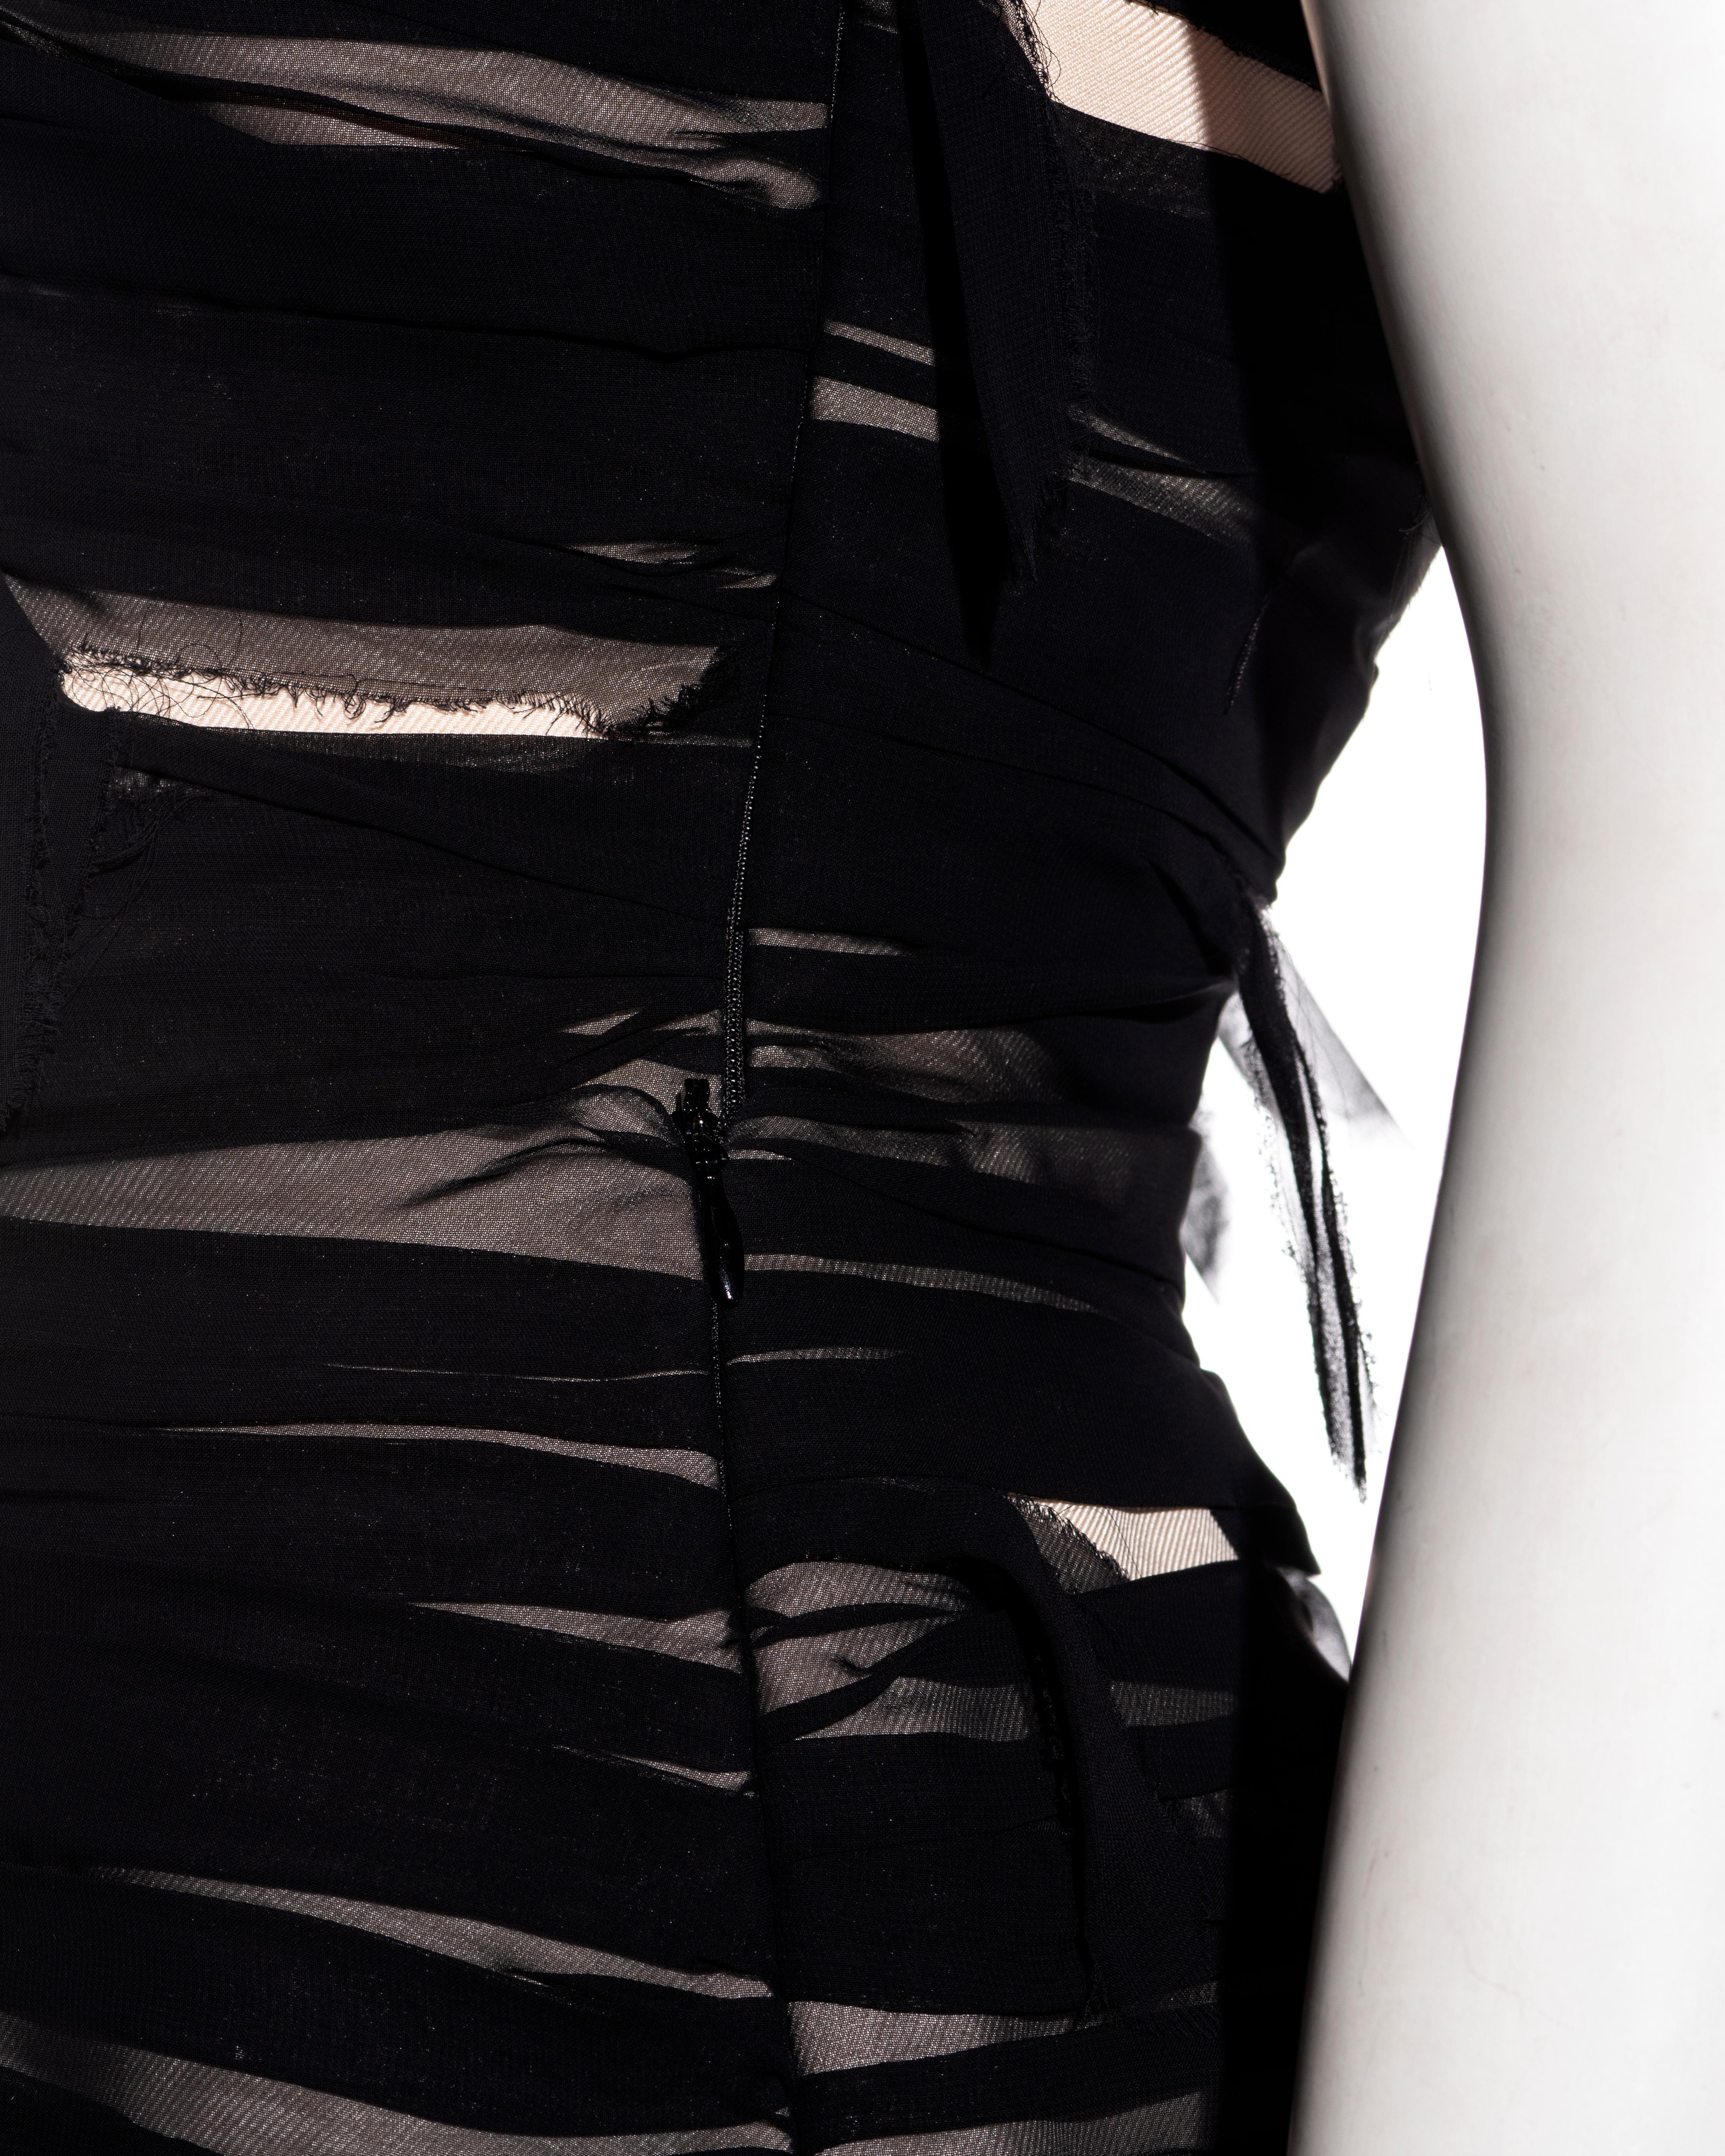 Martin Margiela black shredded chiffon corset and mini skirt set, ss 2009 1